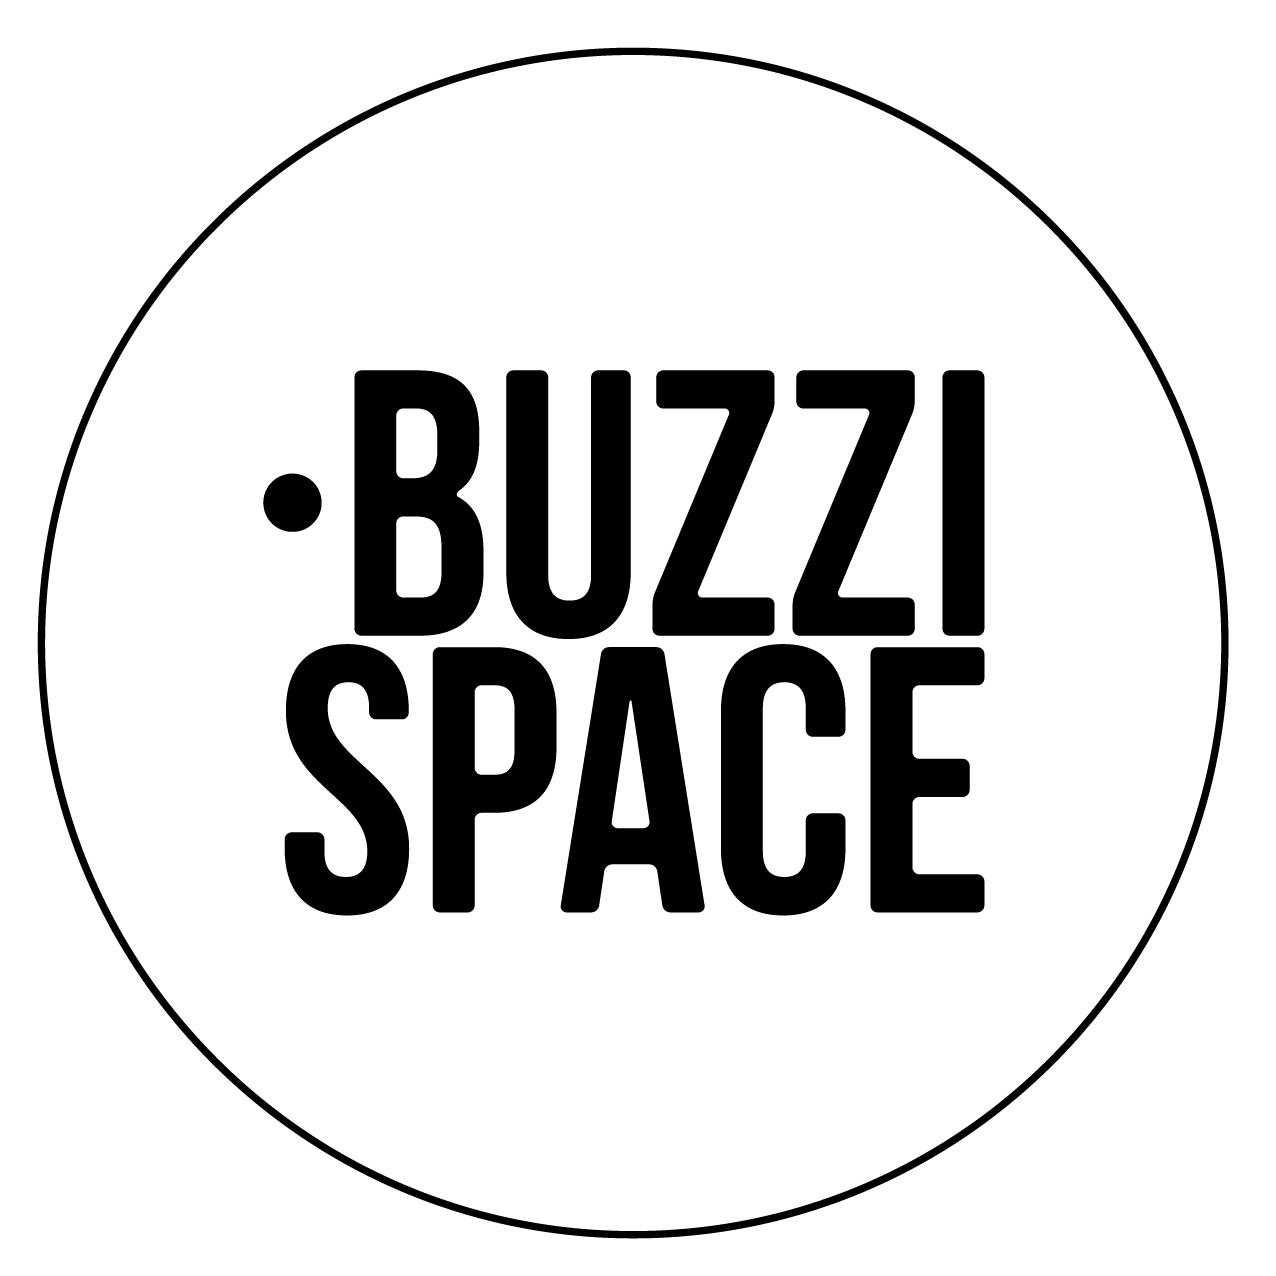 buzzi space .png